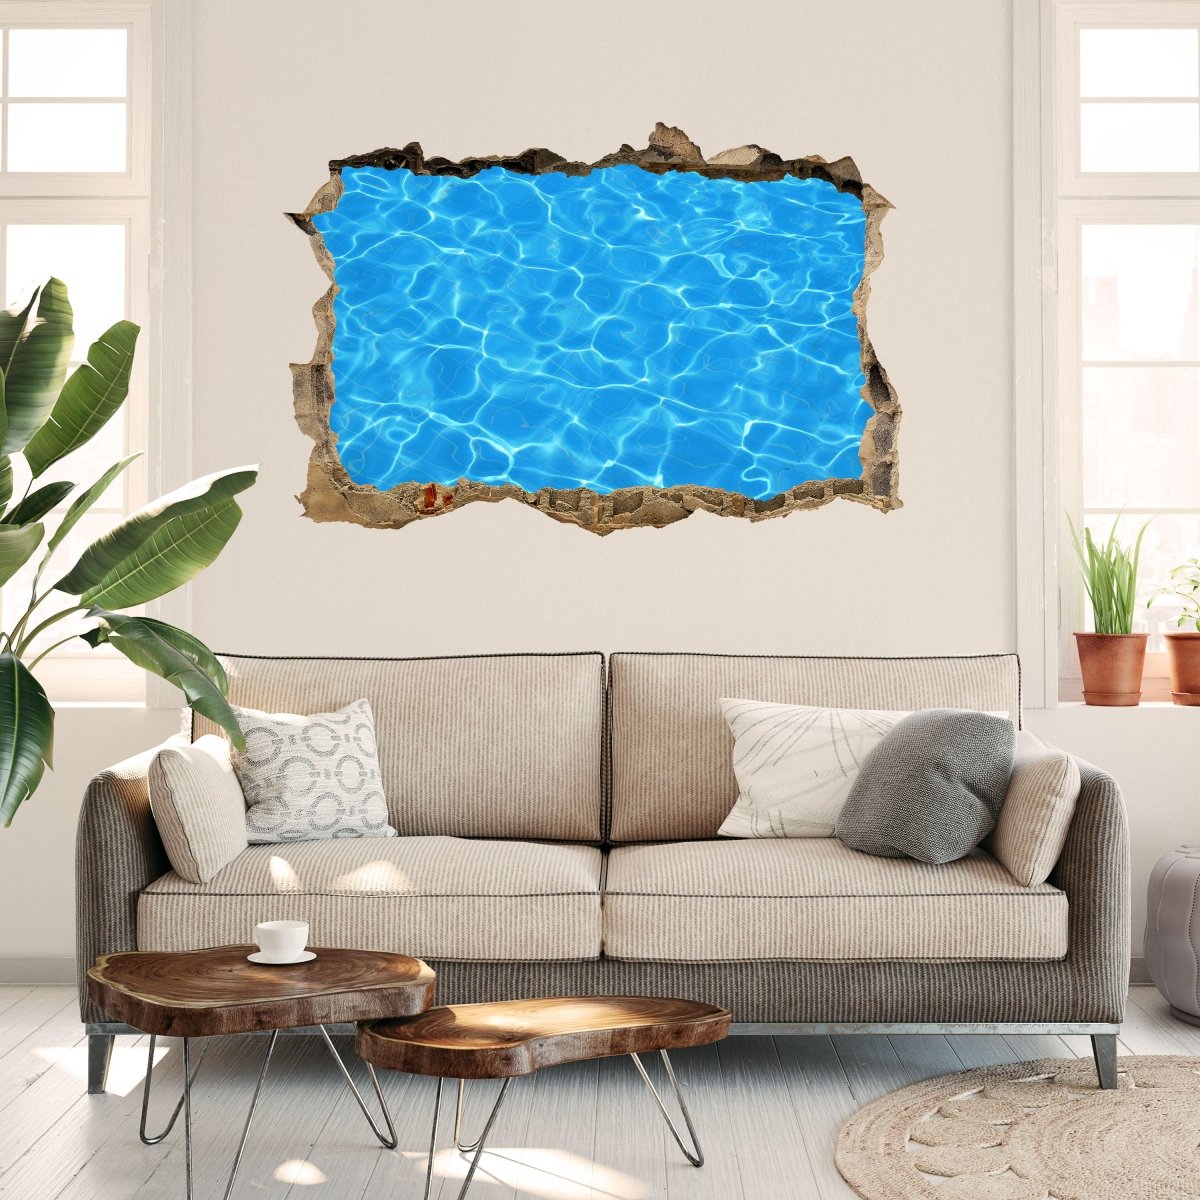 3D wall sticker water pool light effect - Wall Decal M1010